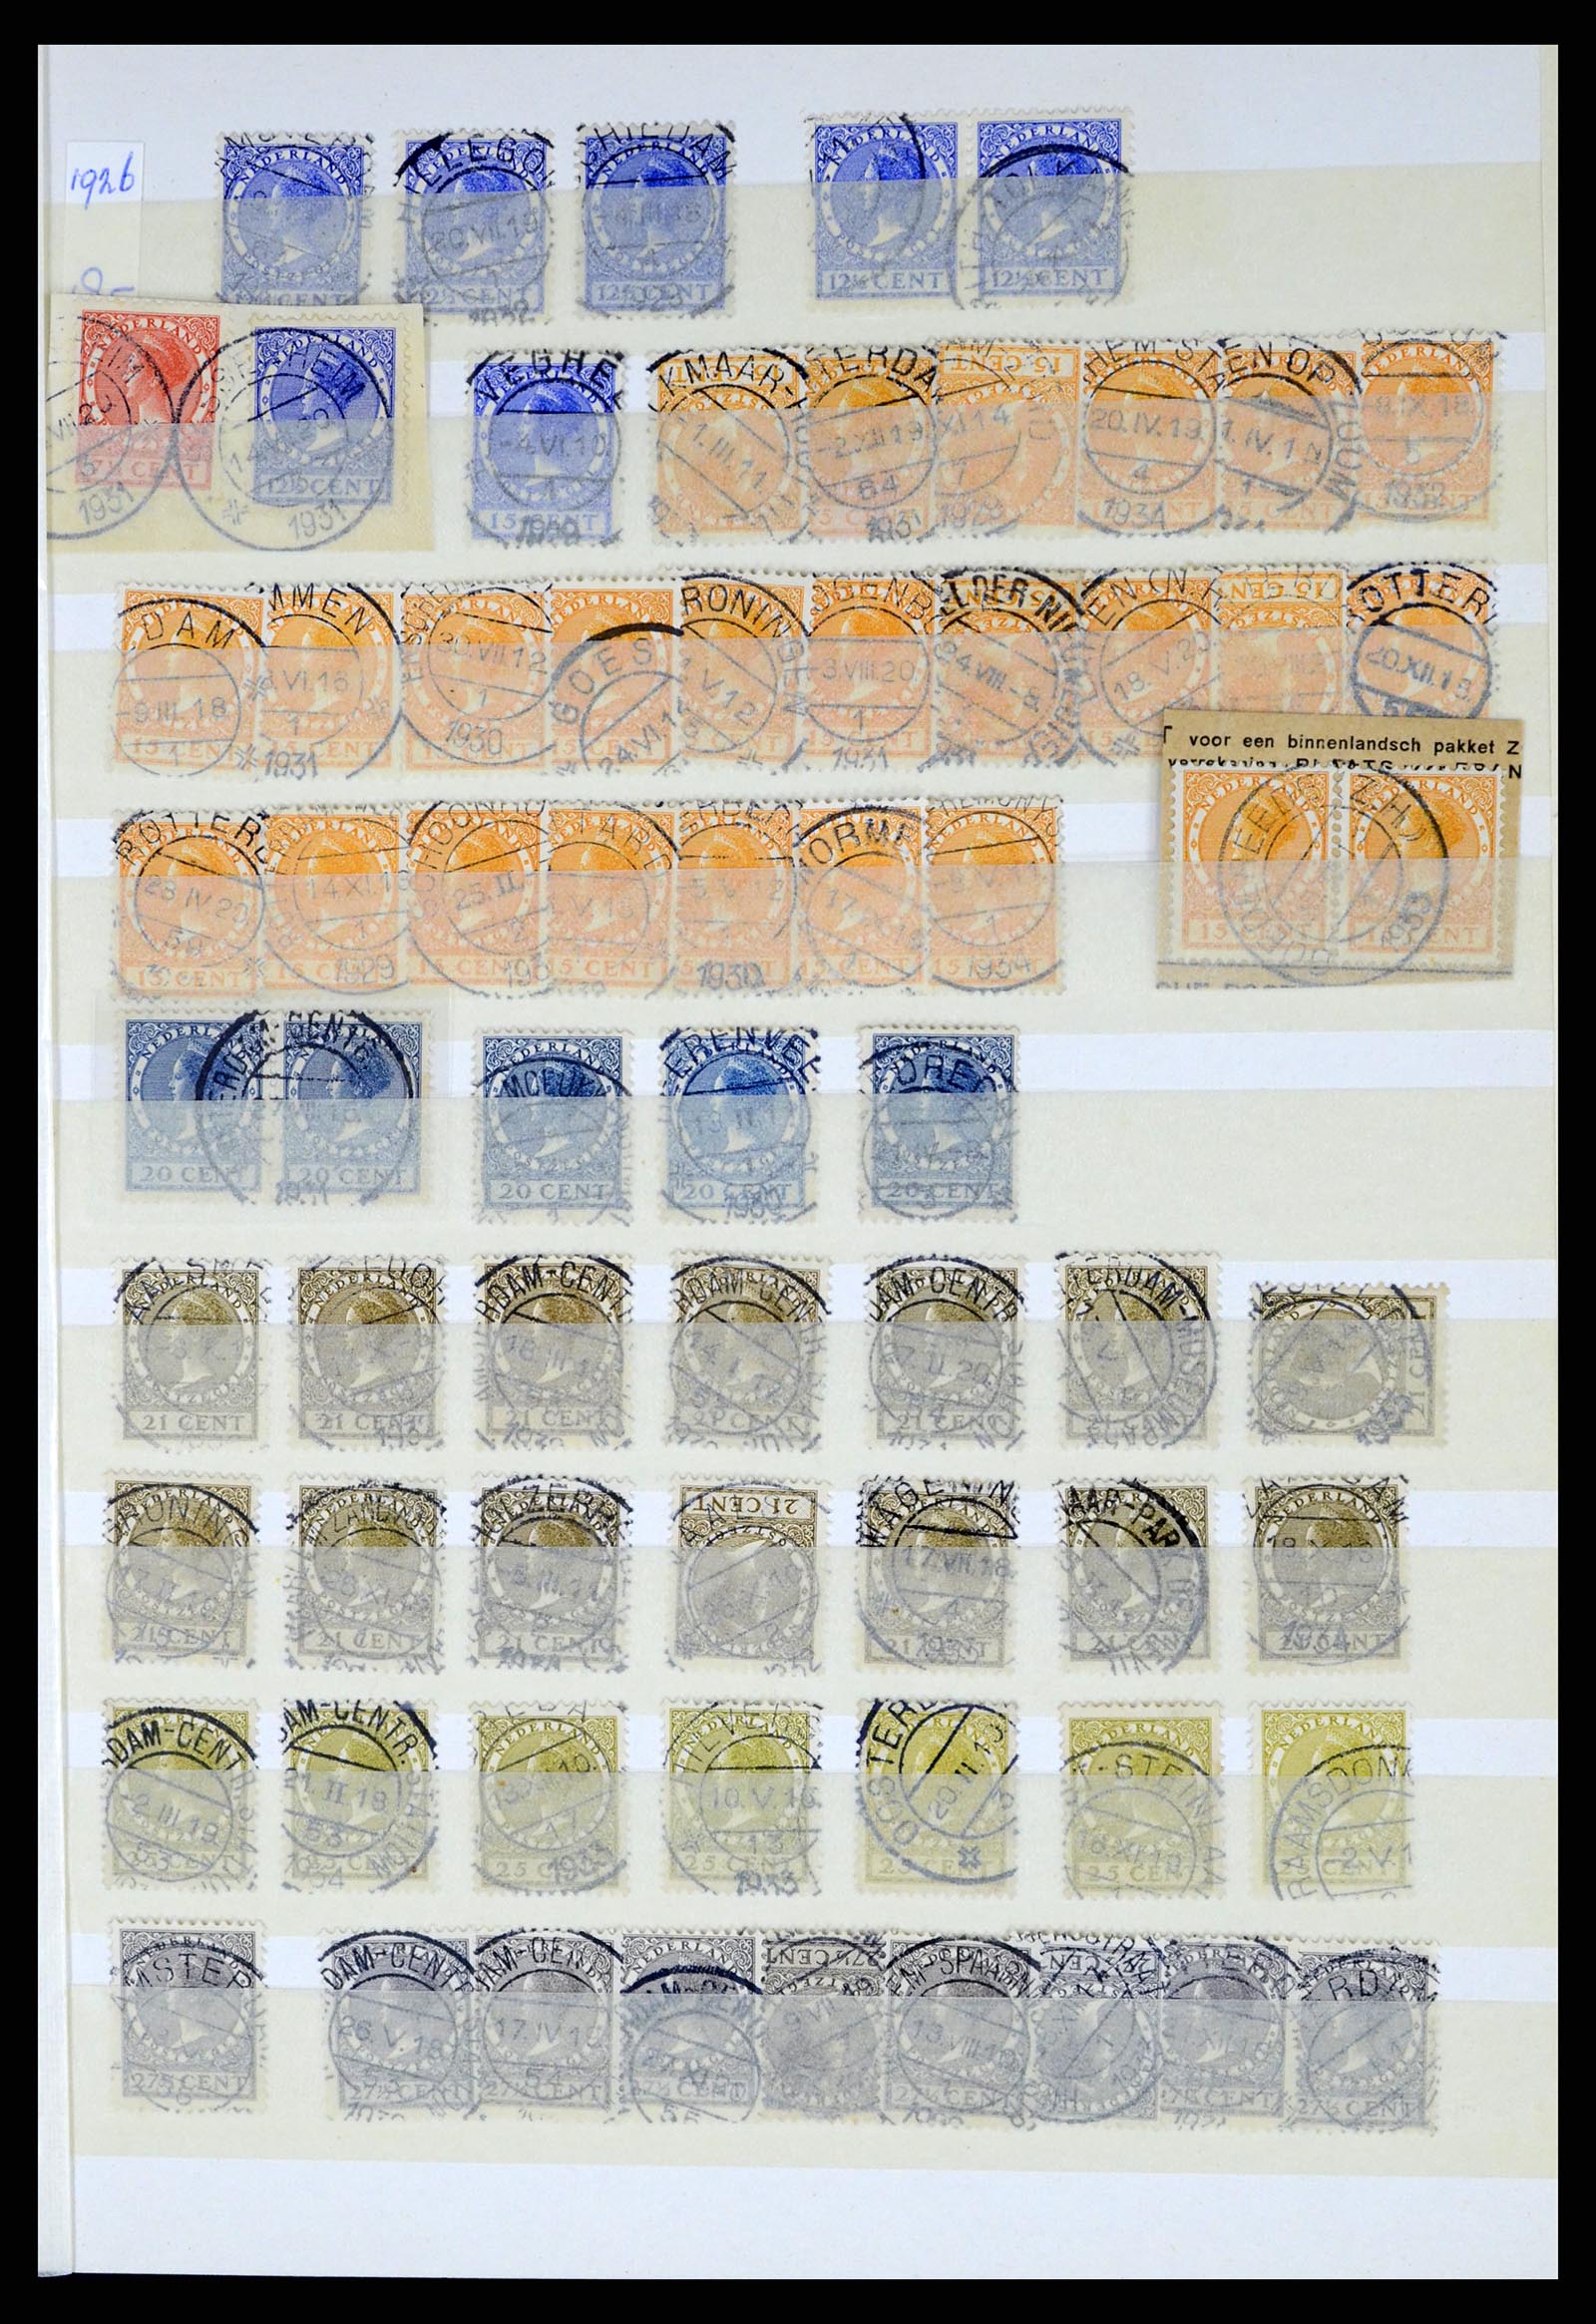 37424 007 - Stamp collection 37424 Netherlands shortbar cancels.